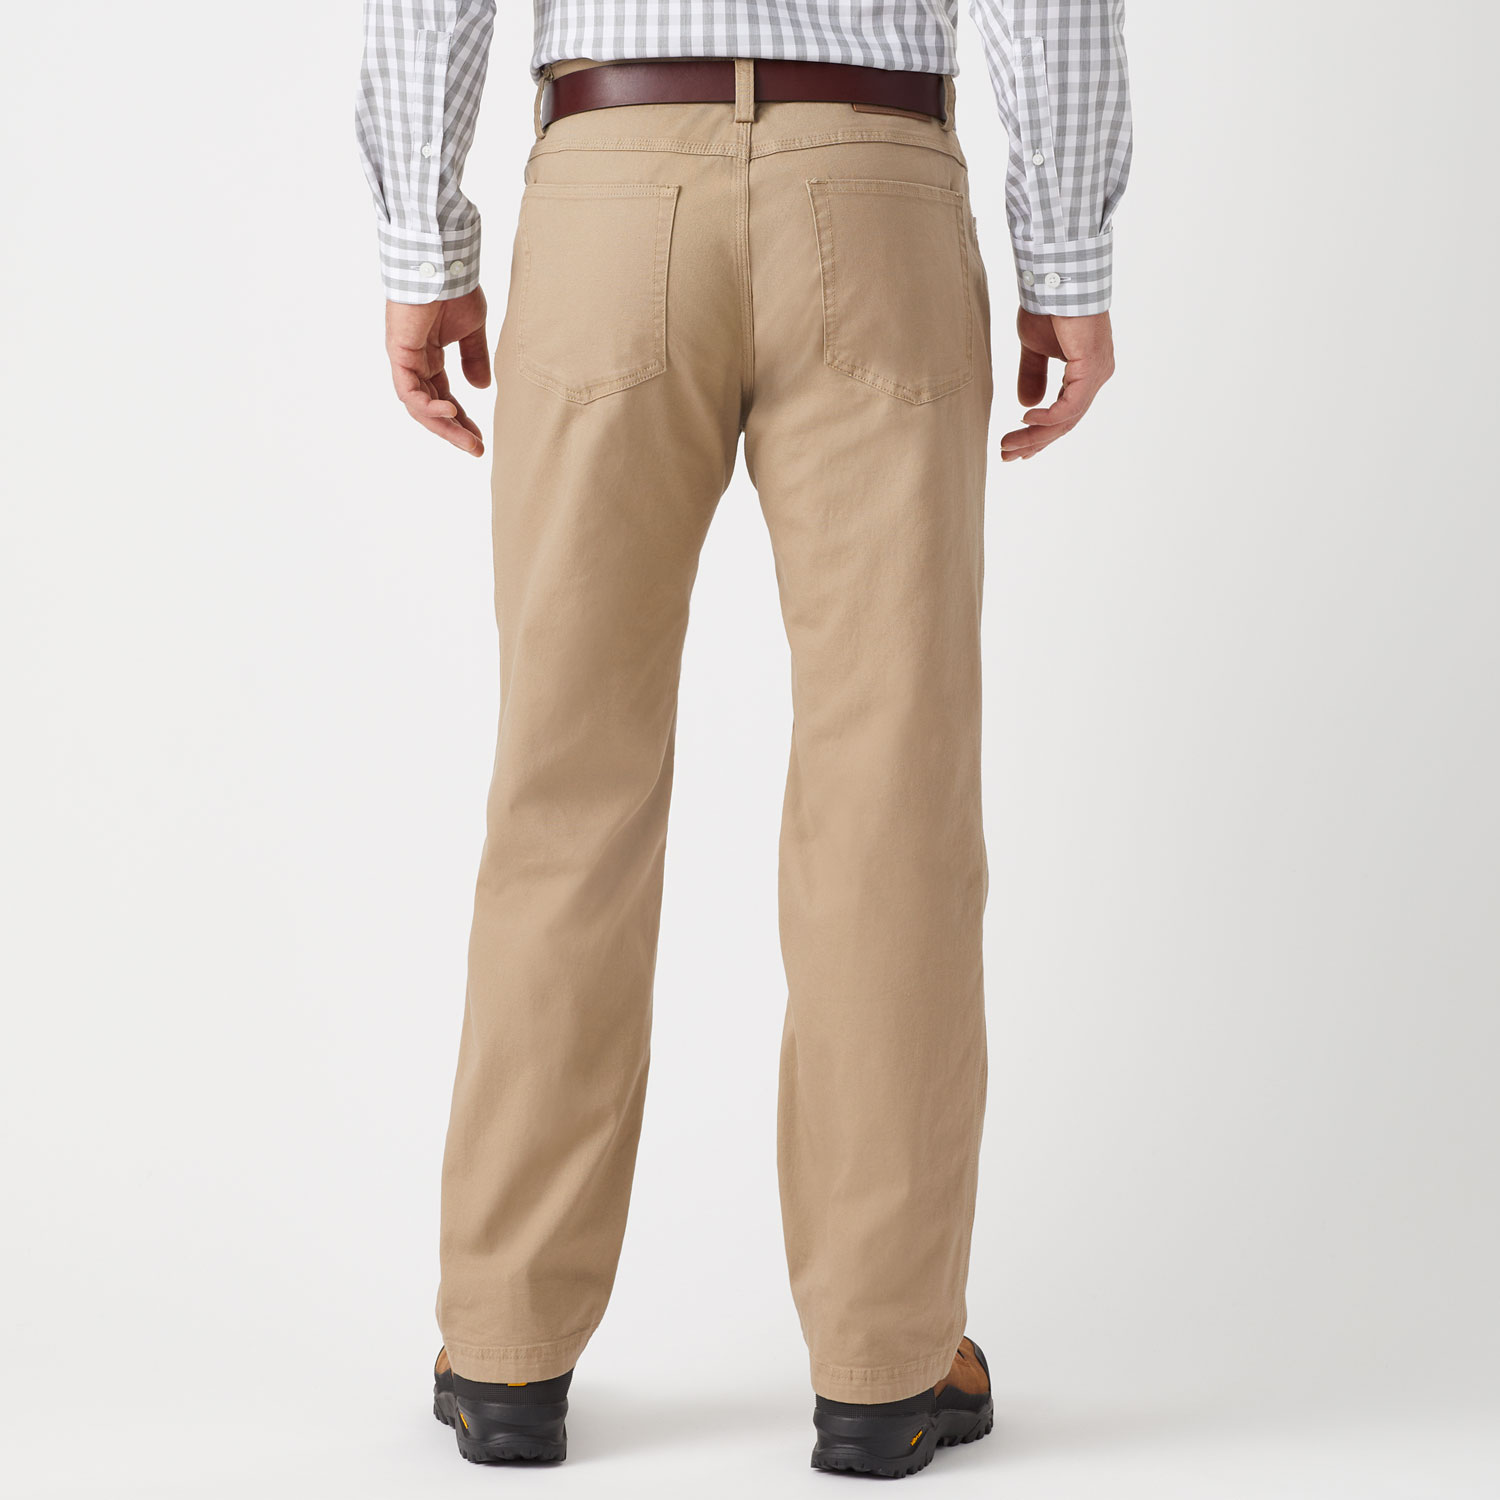 Men's DuluthFlex Fire Hose Relaxed Fit 5-Pocket Pants